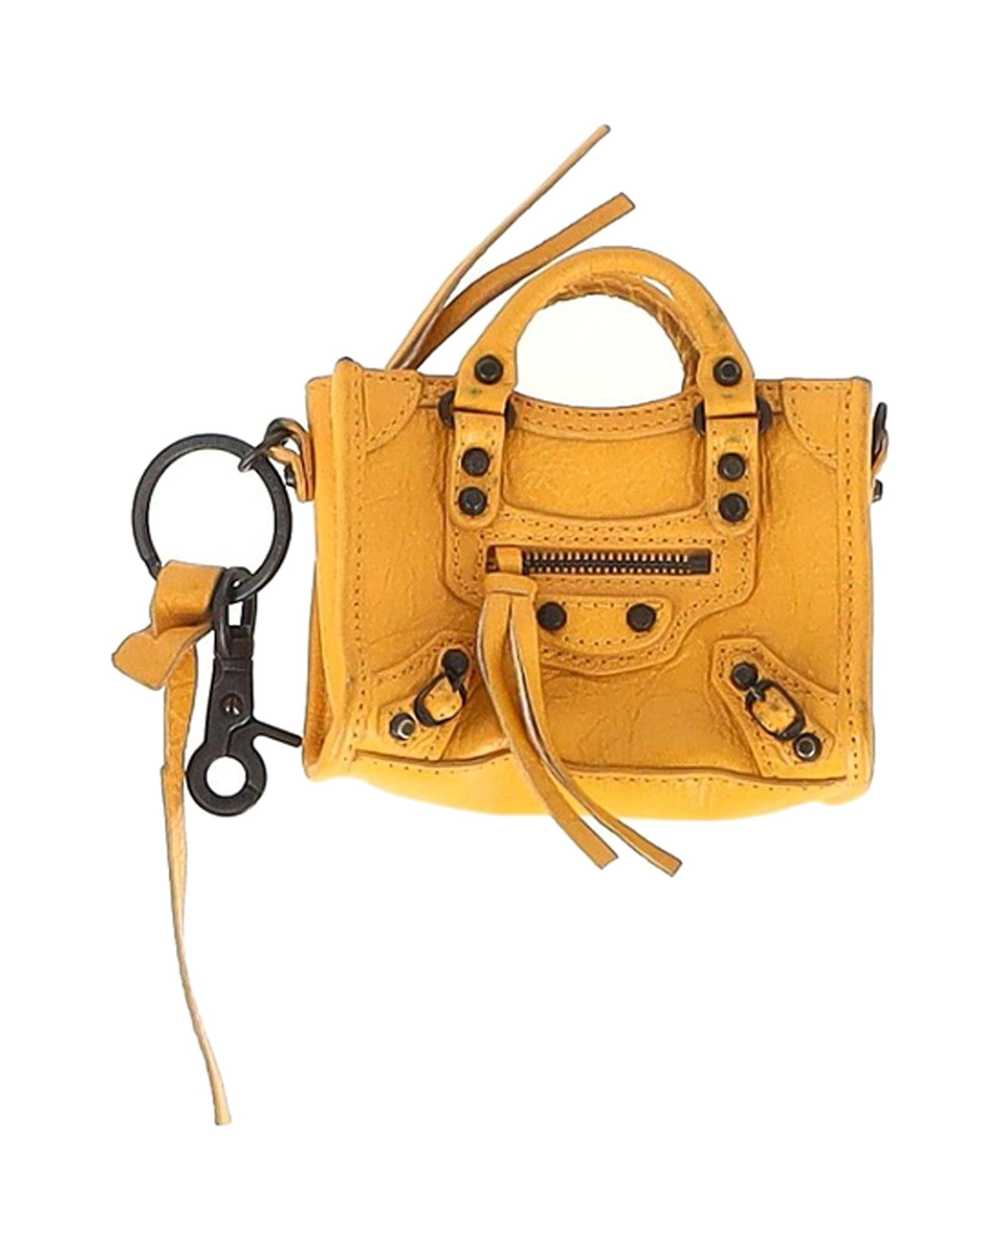 Product Details Balenciaga Yellow City Bag Charm - image 1